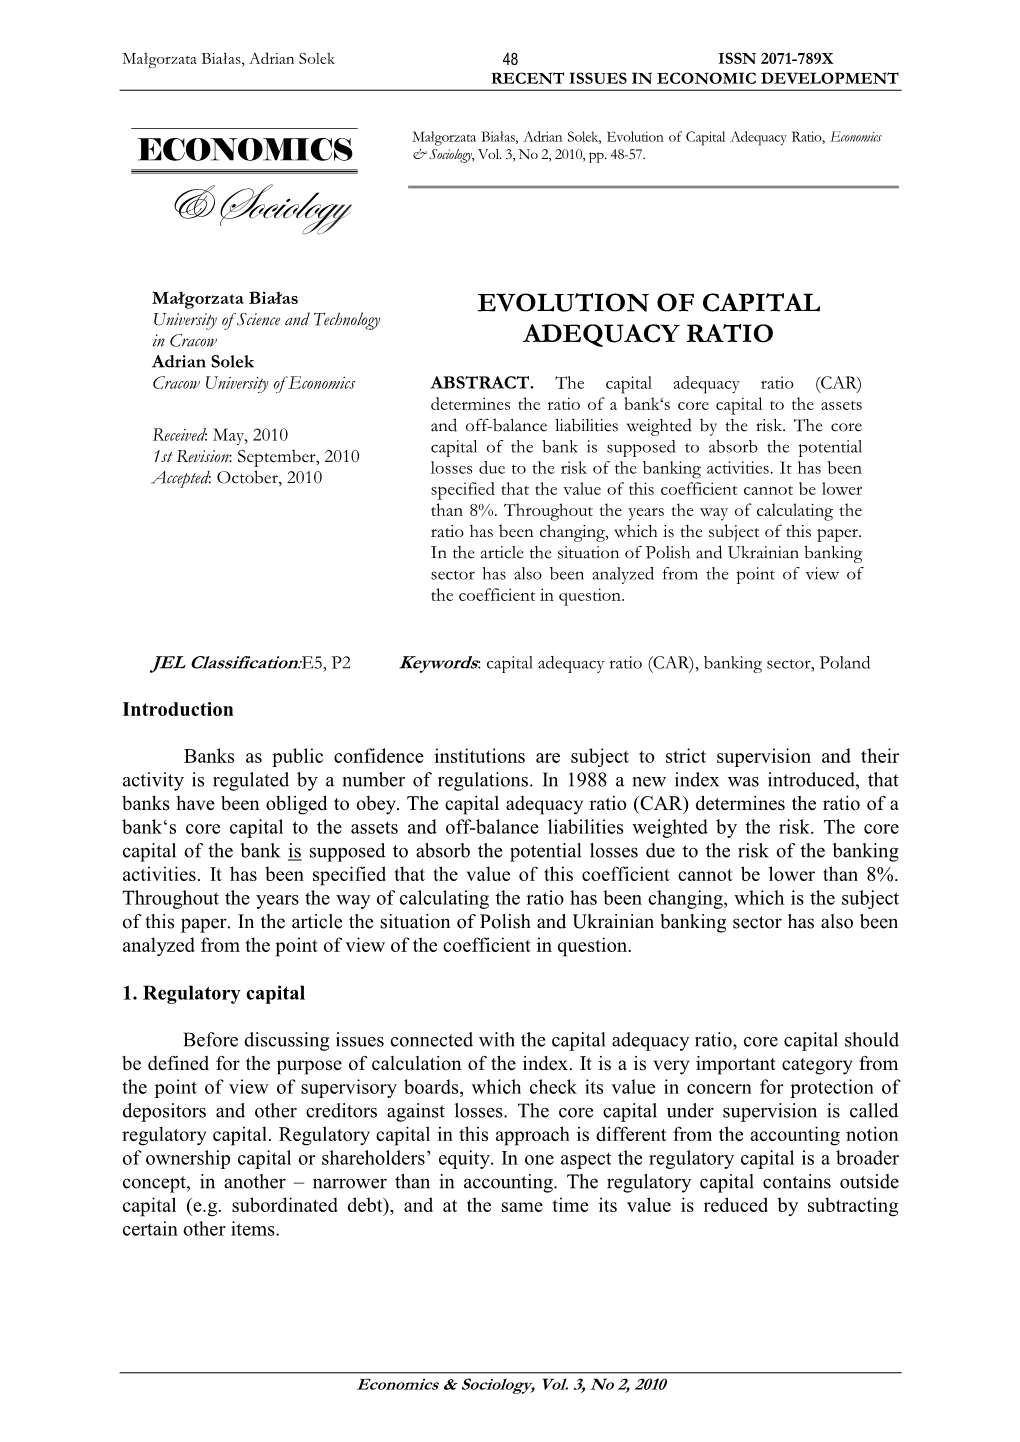 Evolution of Capital Adequacy Ratio, Economics & Sociology, Vol